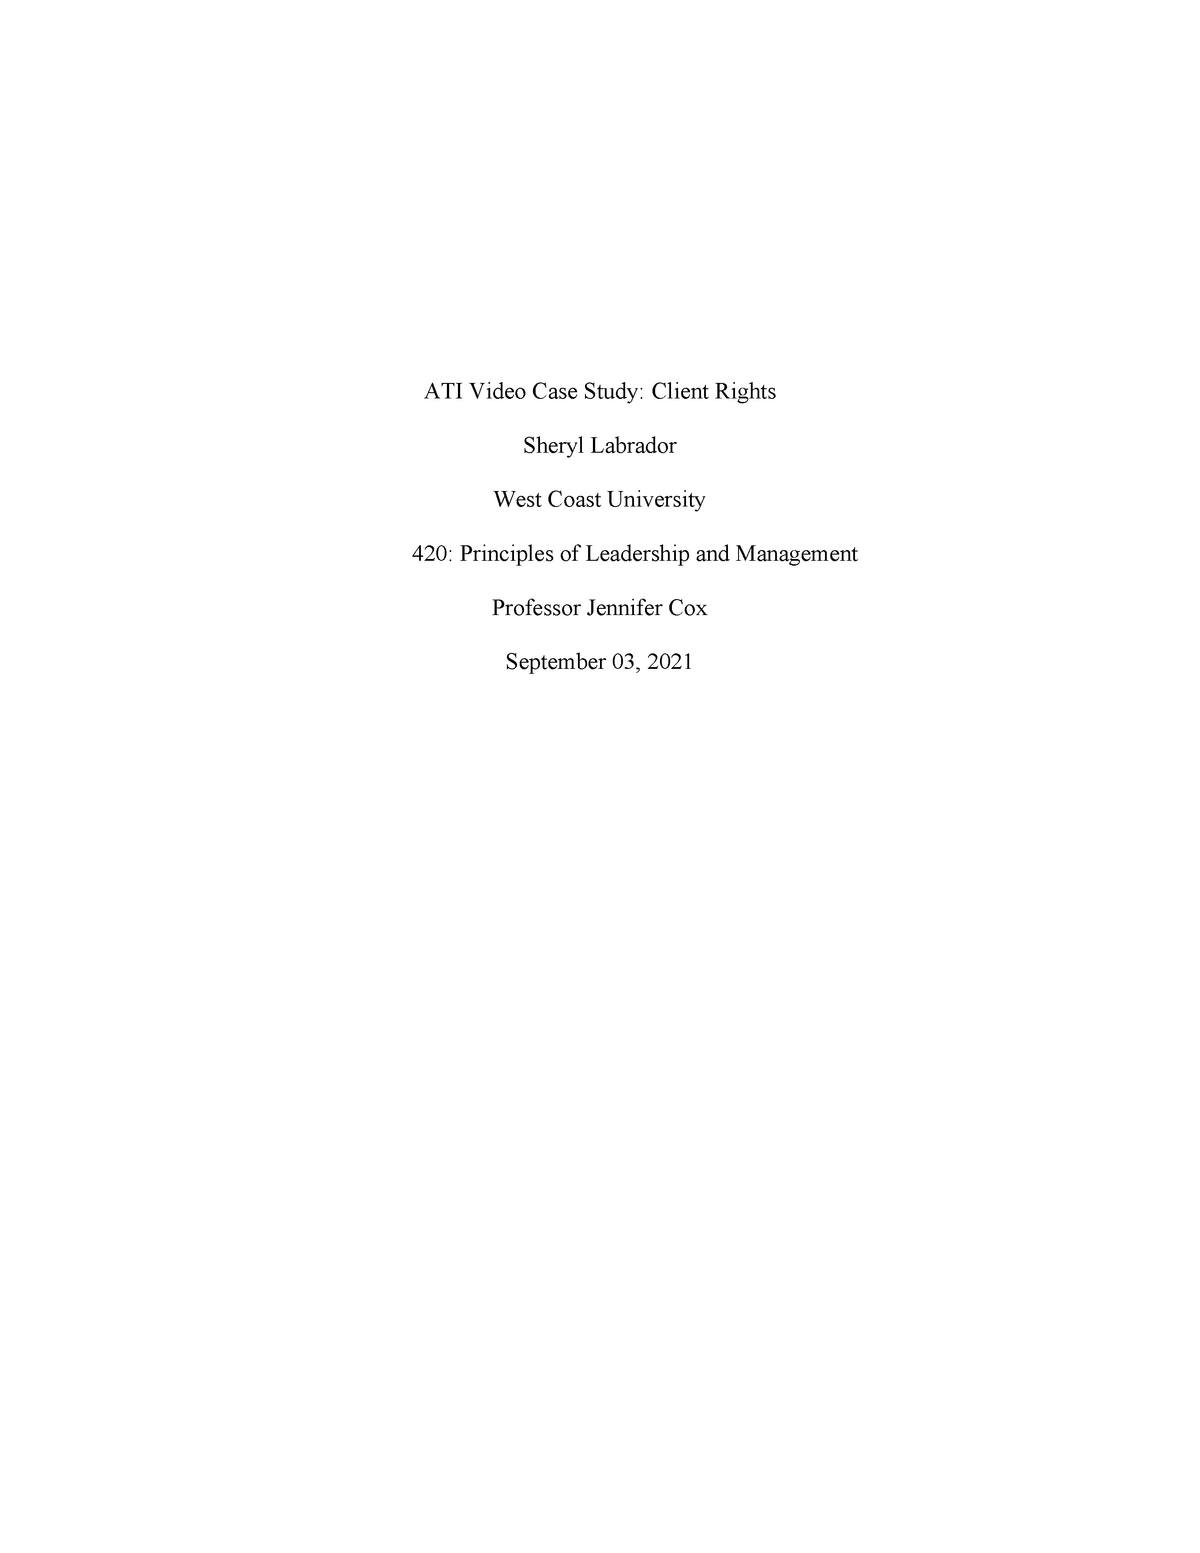 ati client rights case study